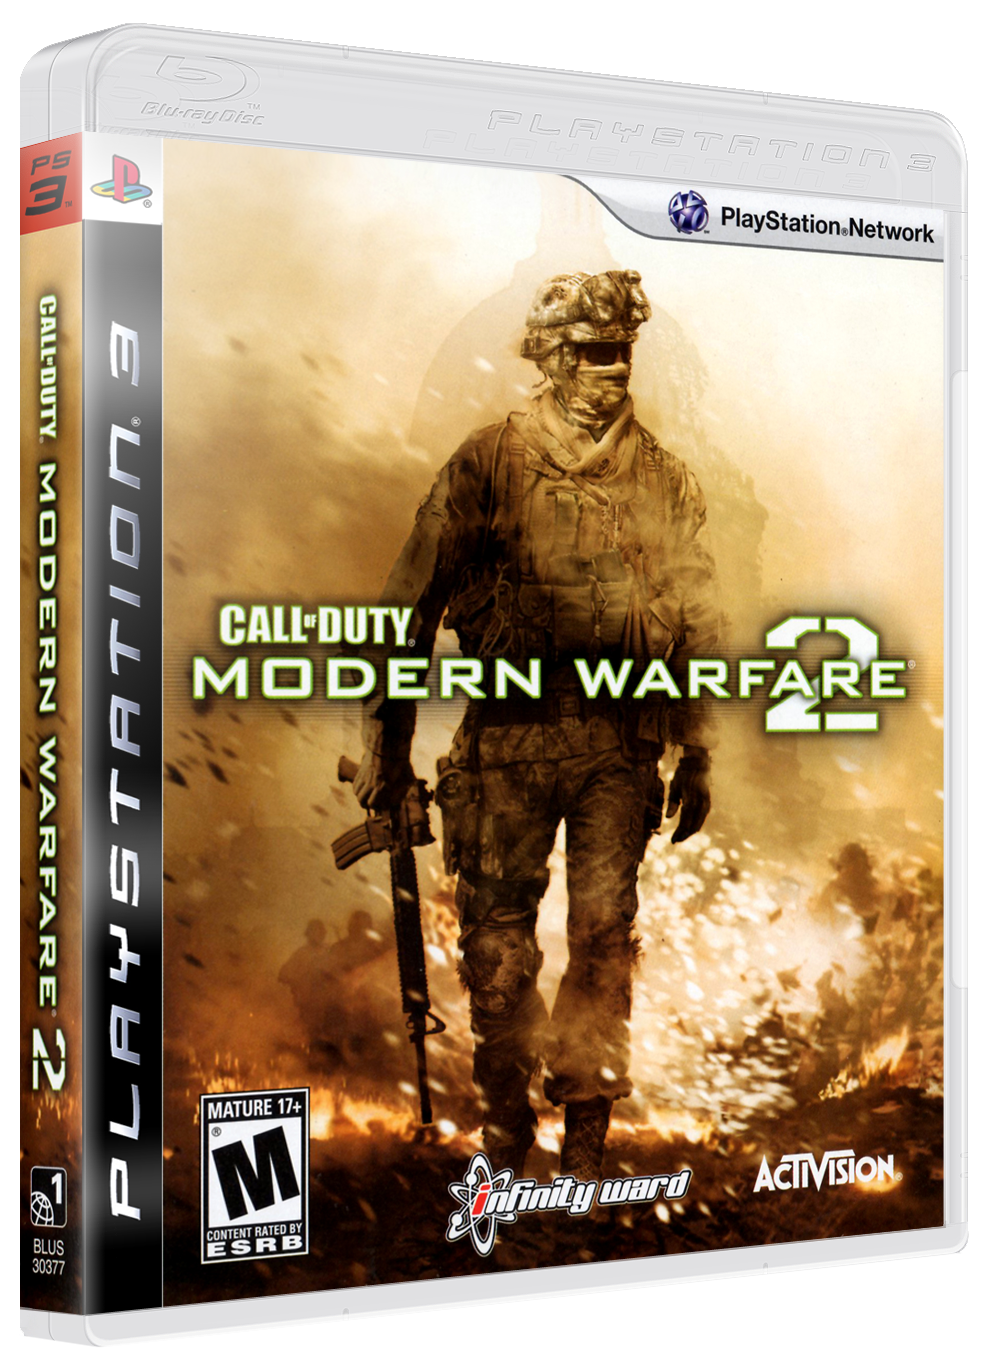 PSNPLAY3 Call Of Duty Modern Warfare 2 PS3/PSN DOWNLOAD. PKG + RAP.